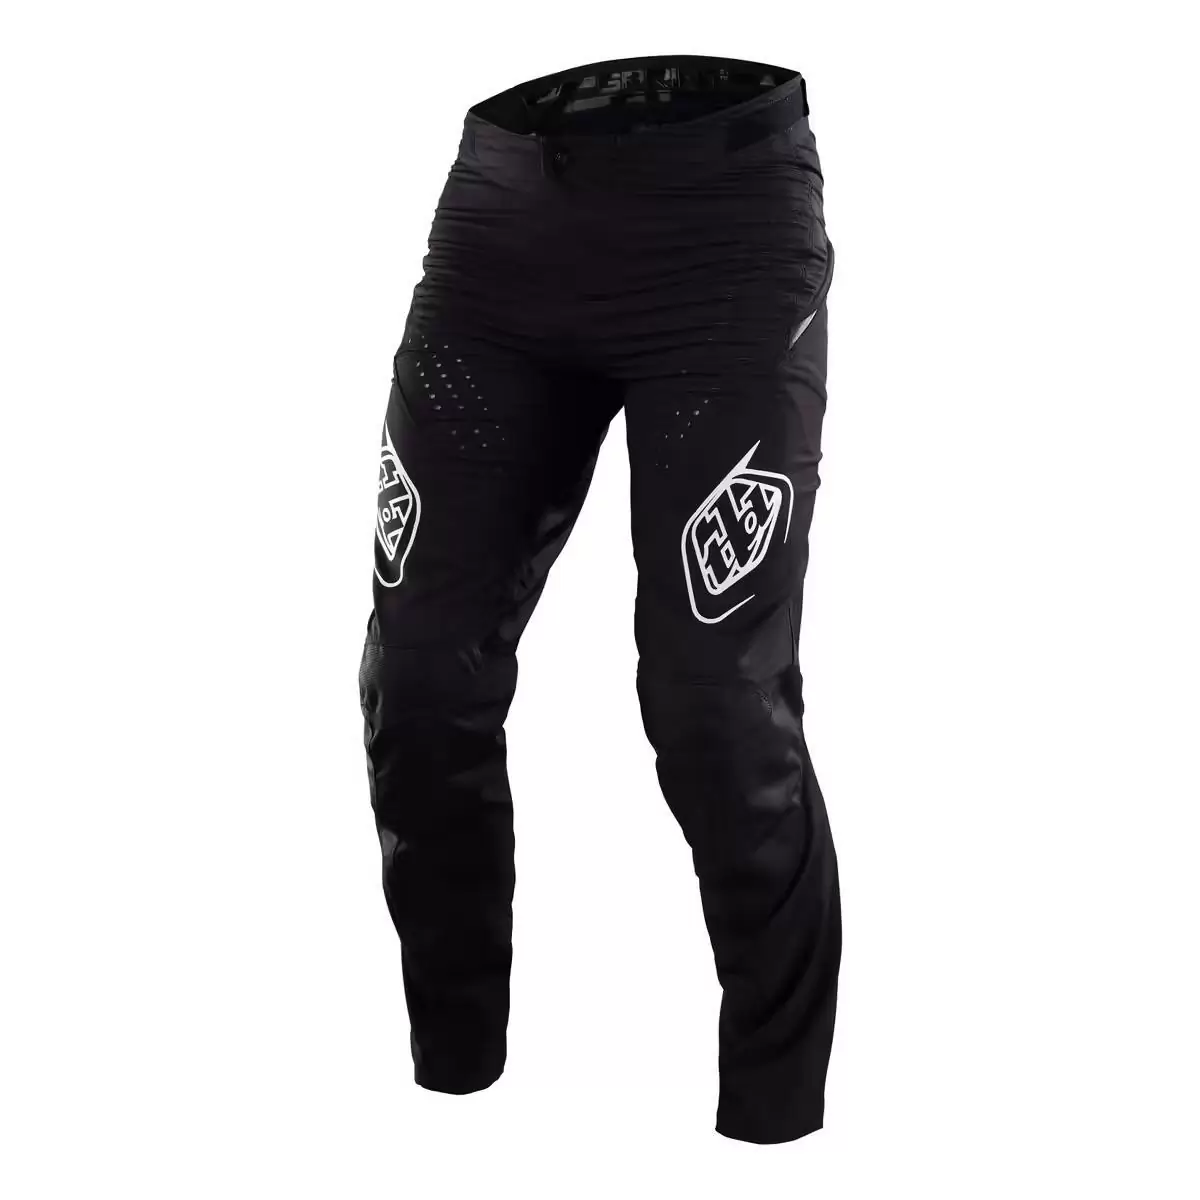 MTB Long Pants Sprint Pant Mono Black Size S - image